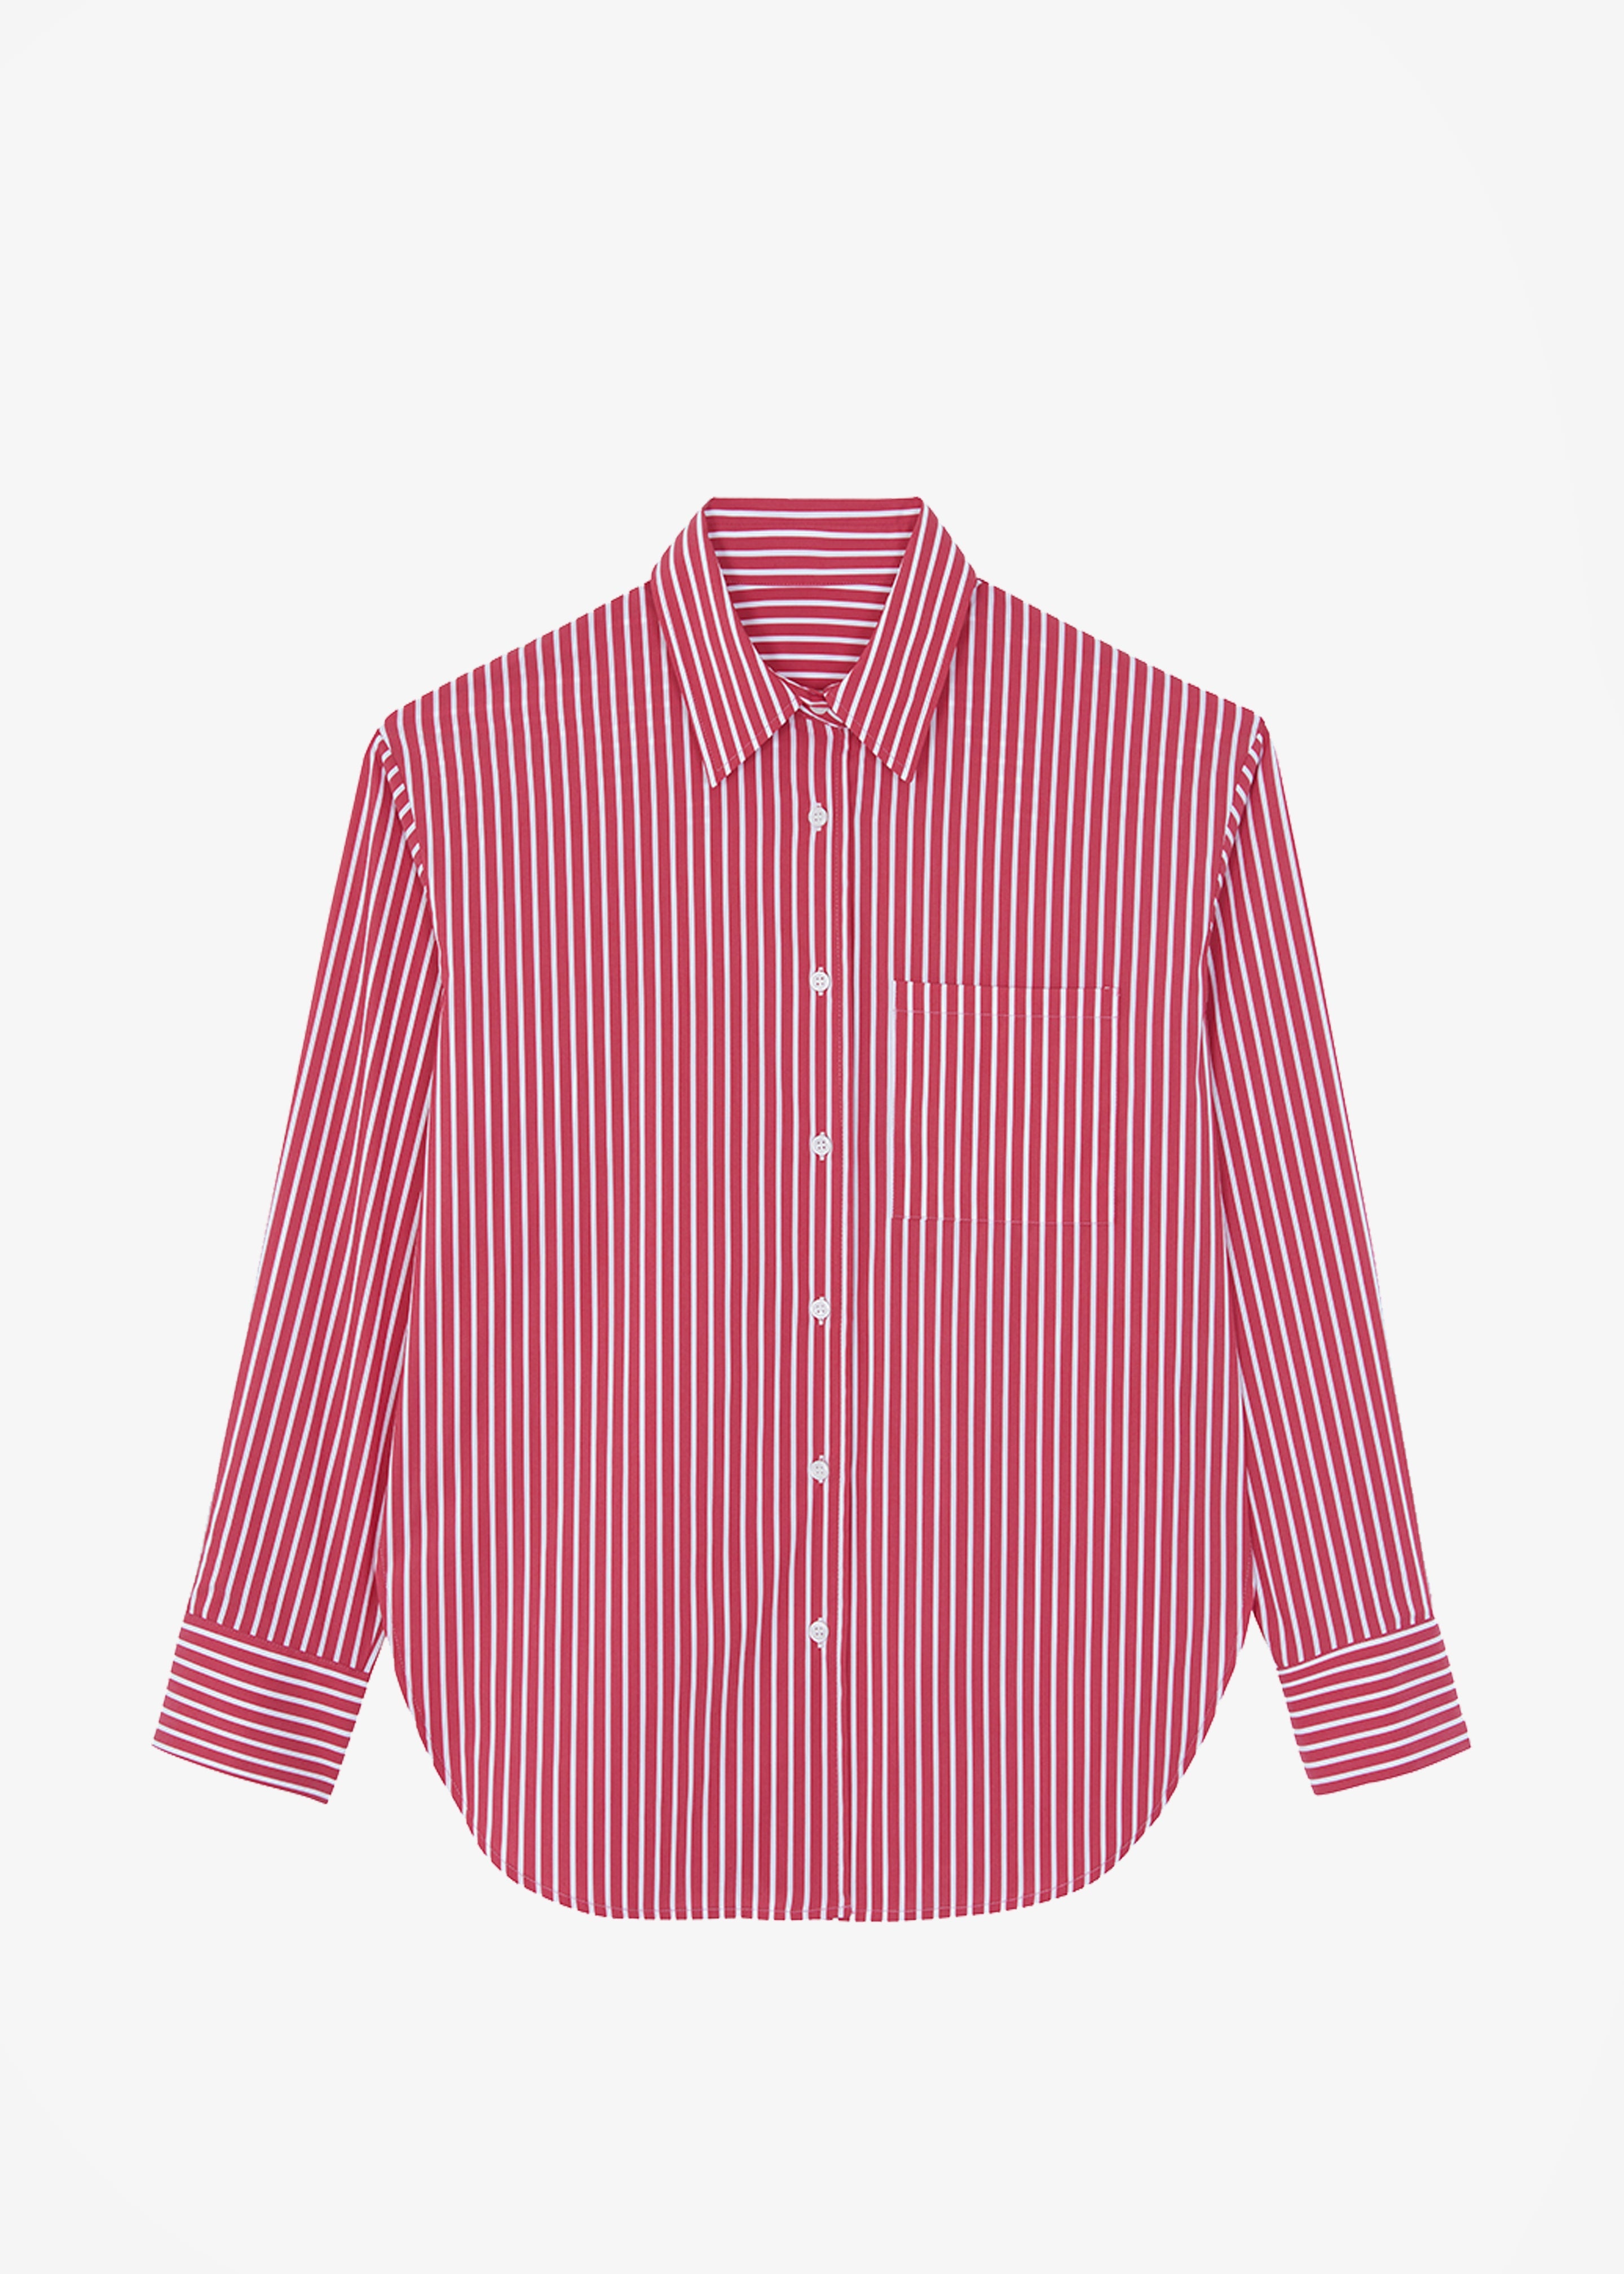 Lui Thin Stripe Shirt - Red Stripe - 7